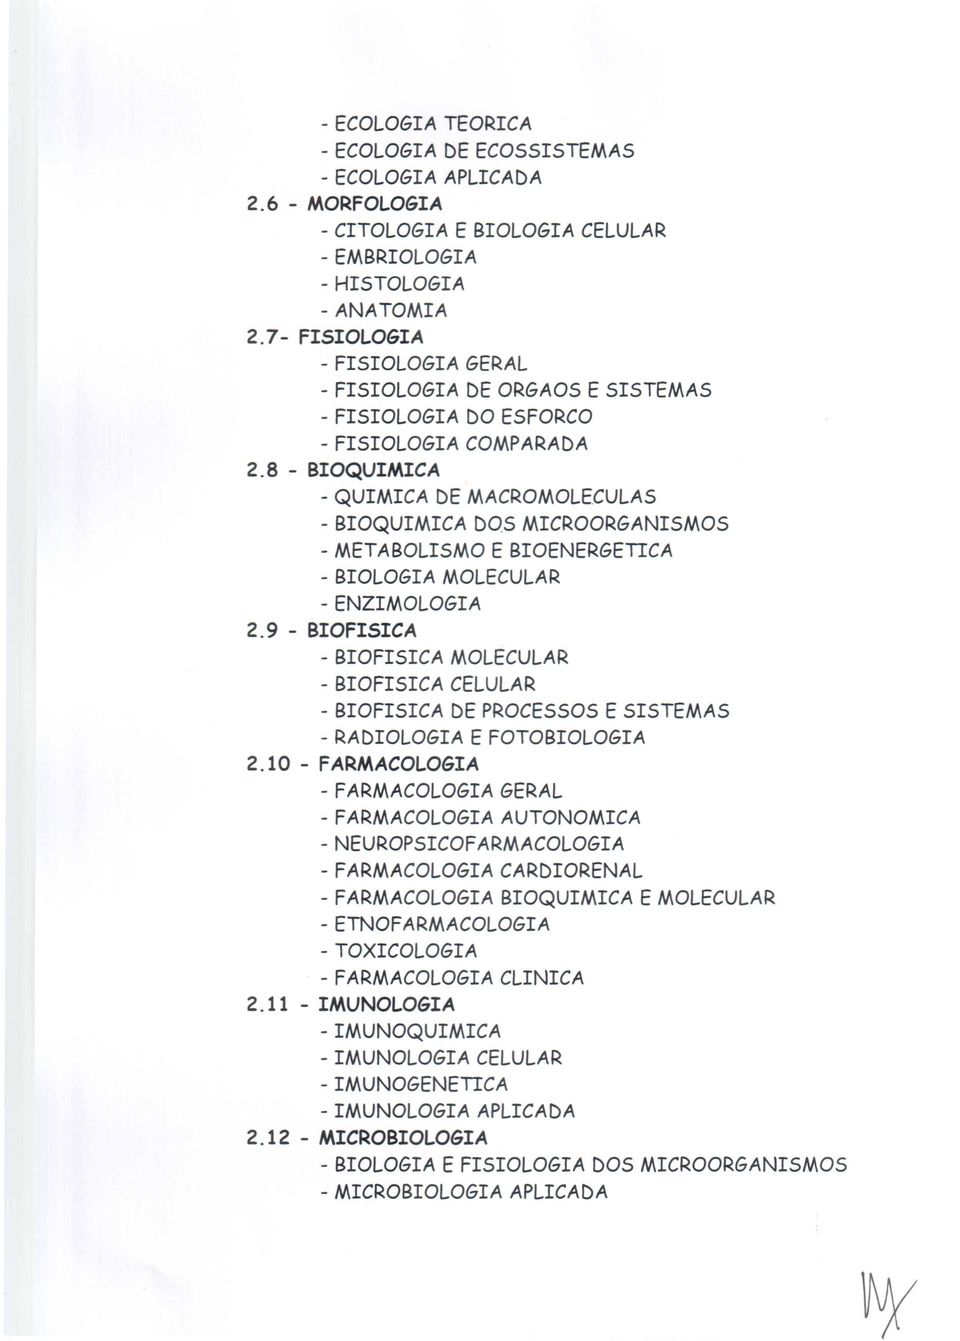 8 - BIQUIMICA - QUIMICA DE MACRMLECULAS - BIQUIMICA DS MICRRGAISMS - METABLISM E BIEERGETICA - BILGIA MLECULAR - EZIMLGIA 2.